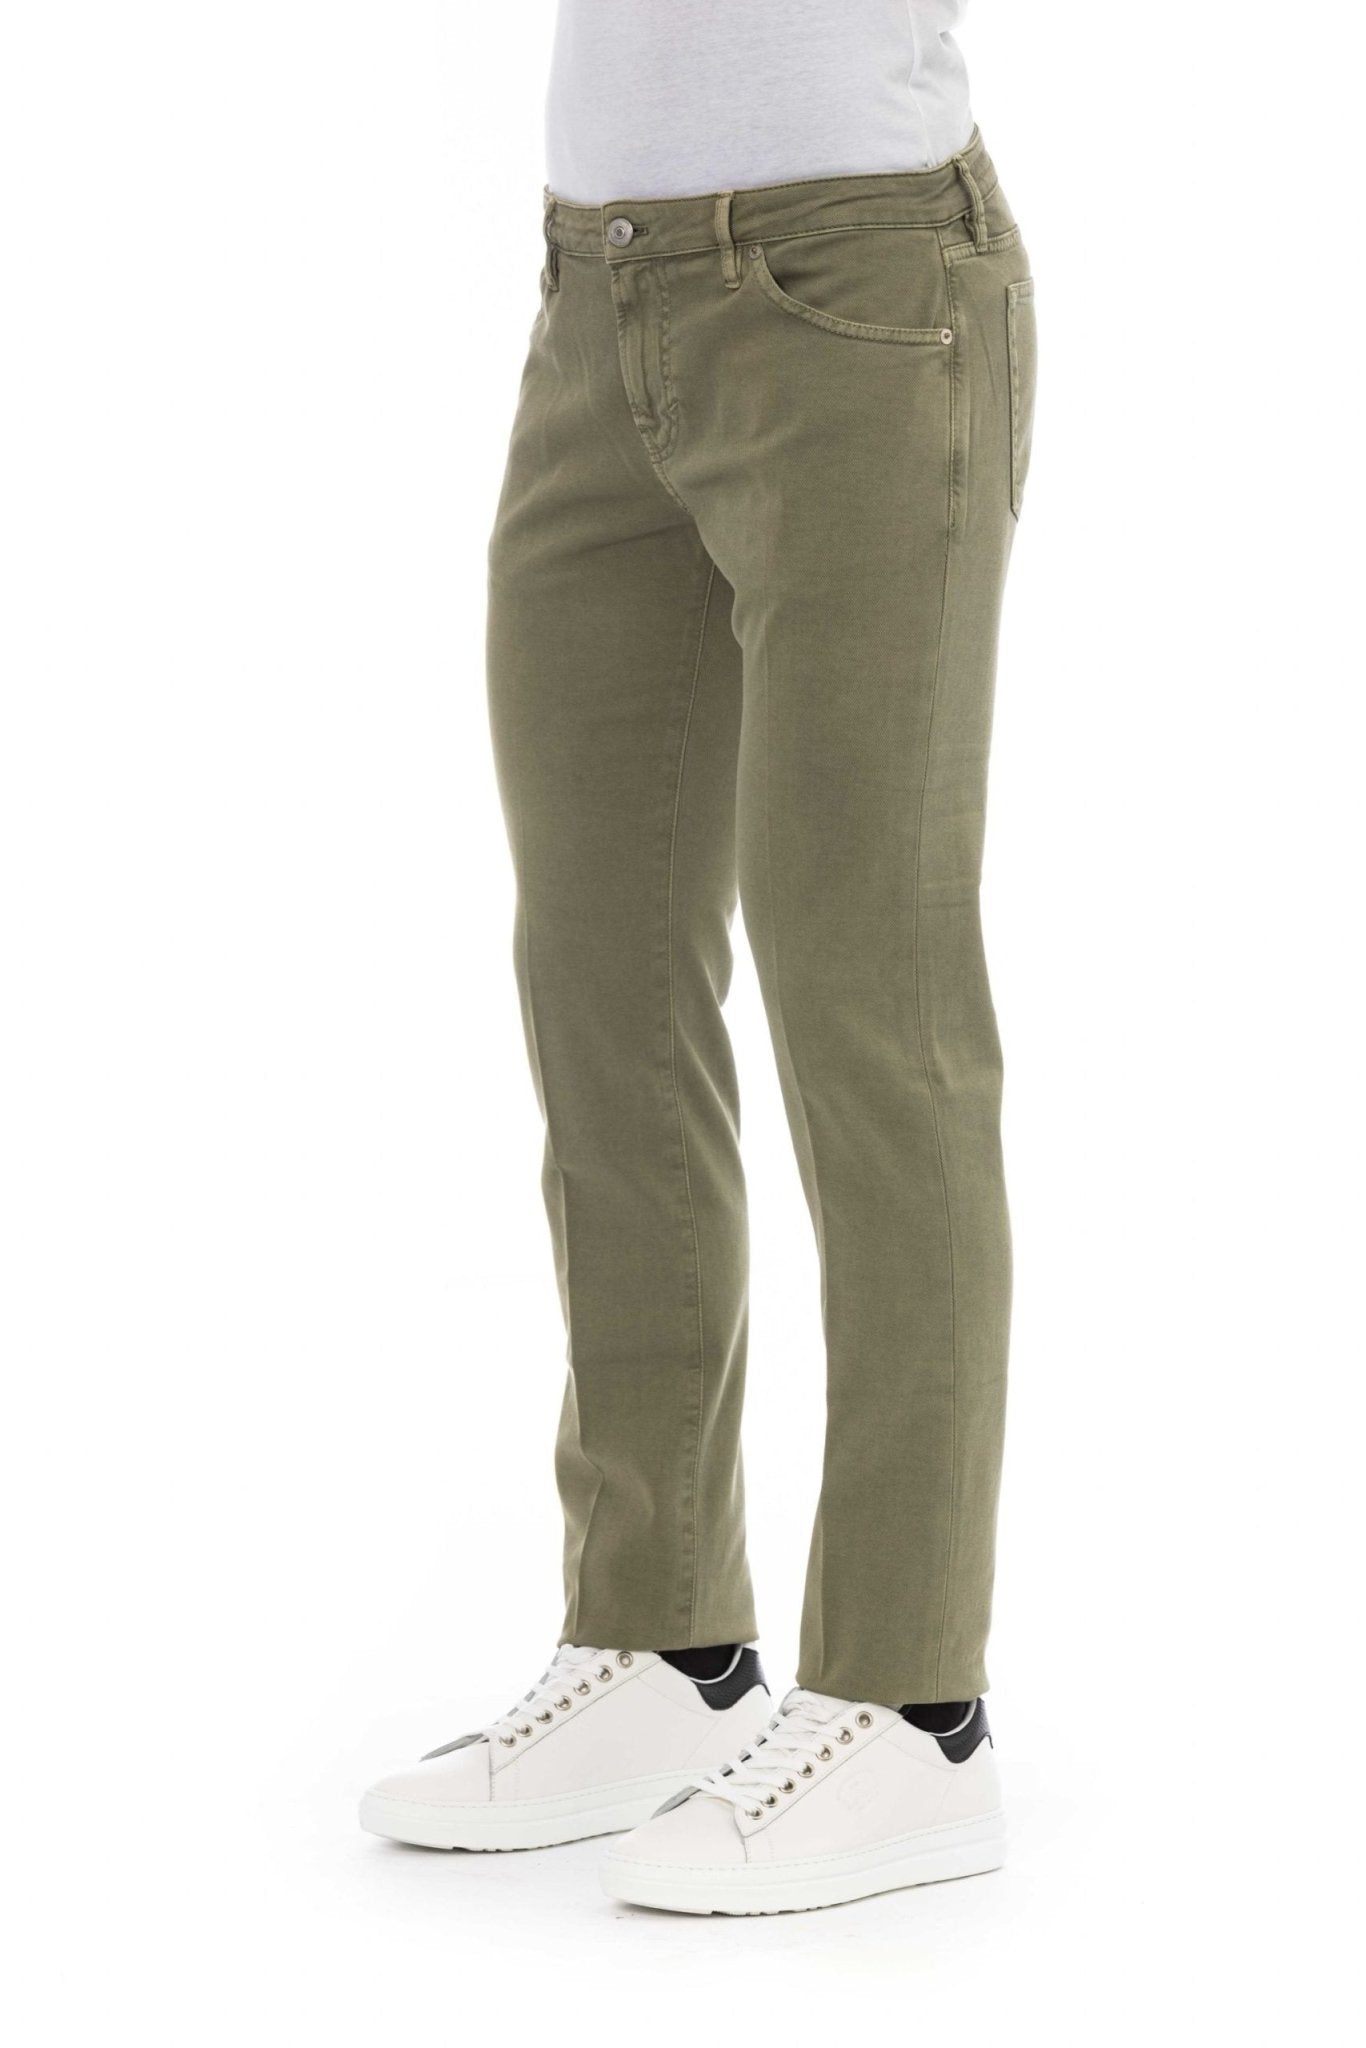 PT Torino Green Cotton Jeans & Pant - Fizigo